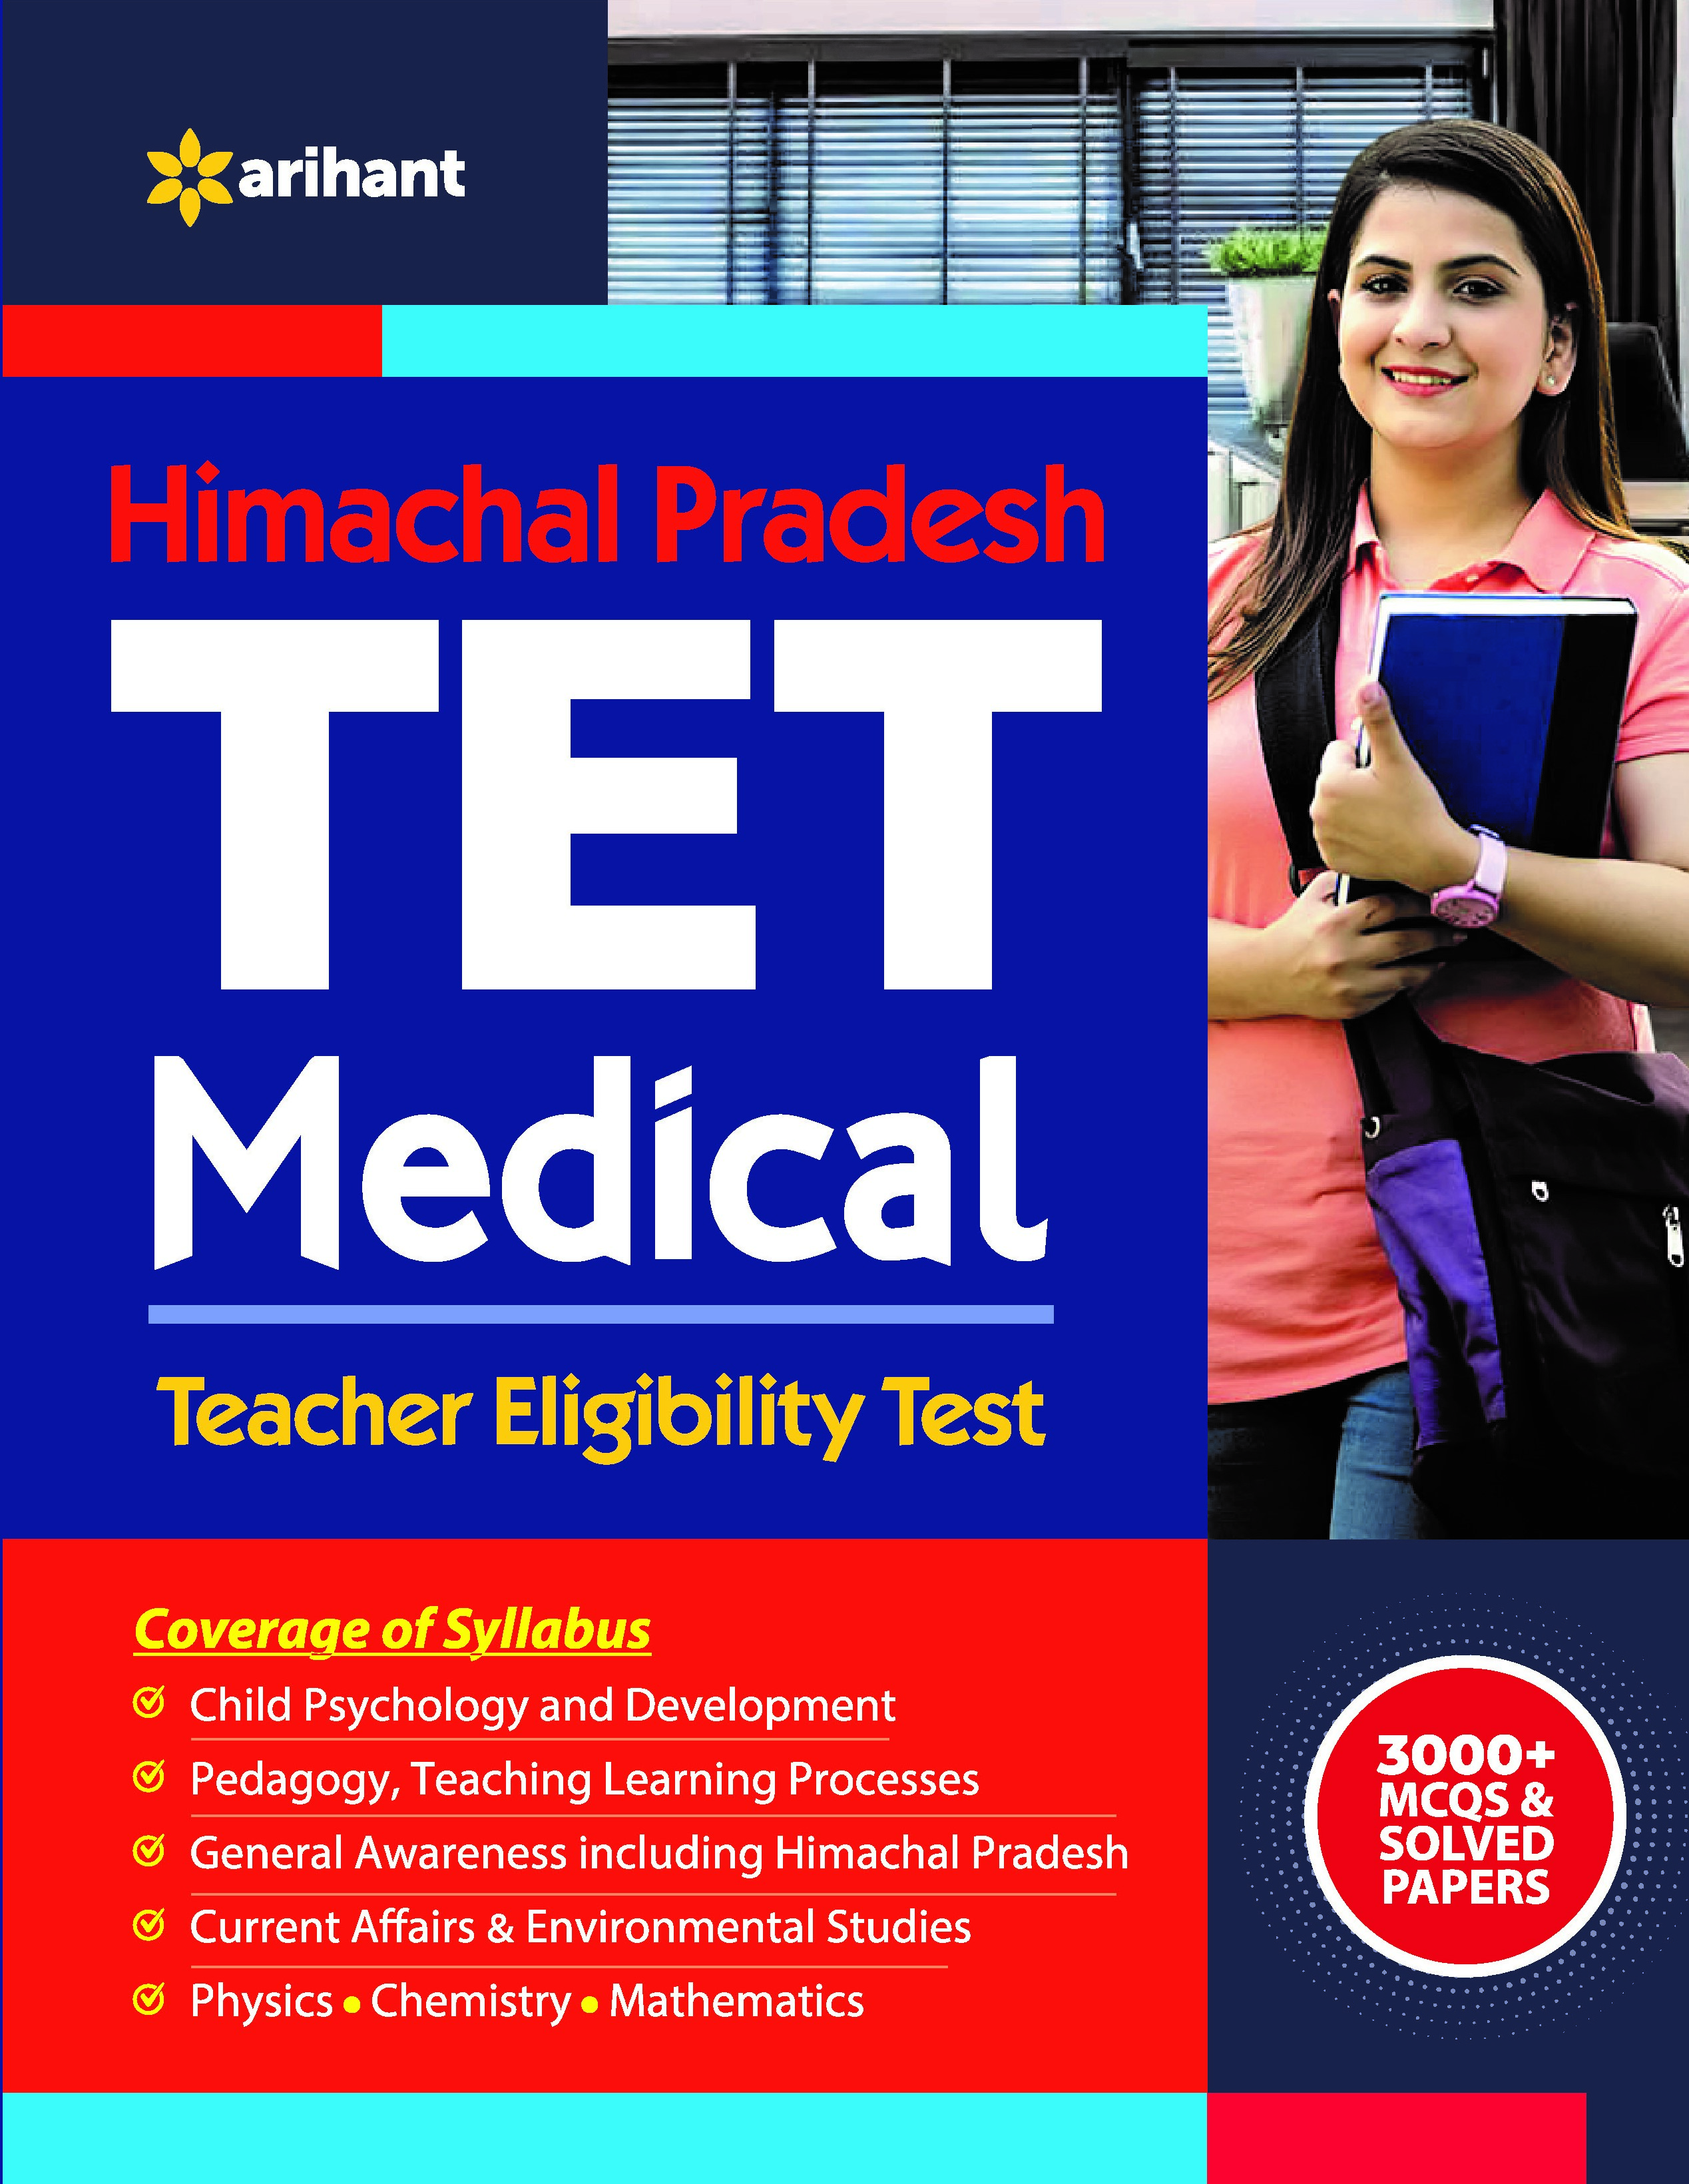 HPTET Himachal Pradesh Teacher Eligibility Test for Medical TGT